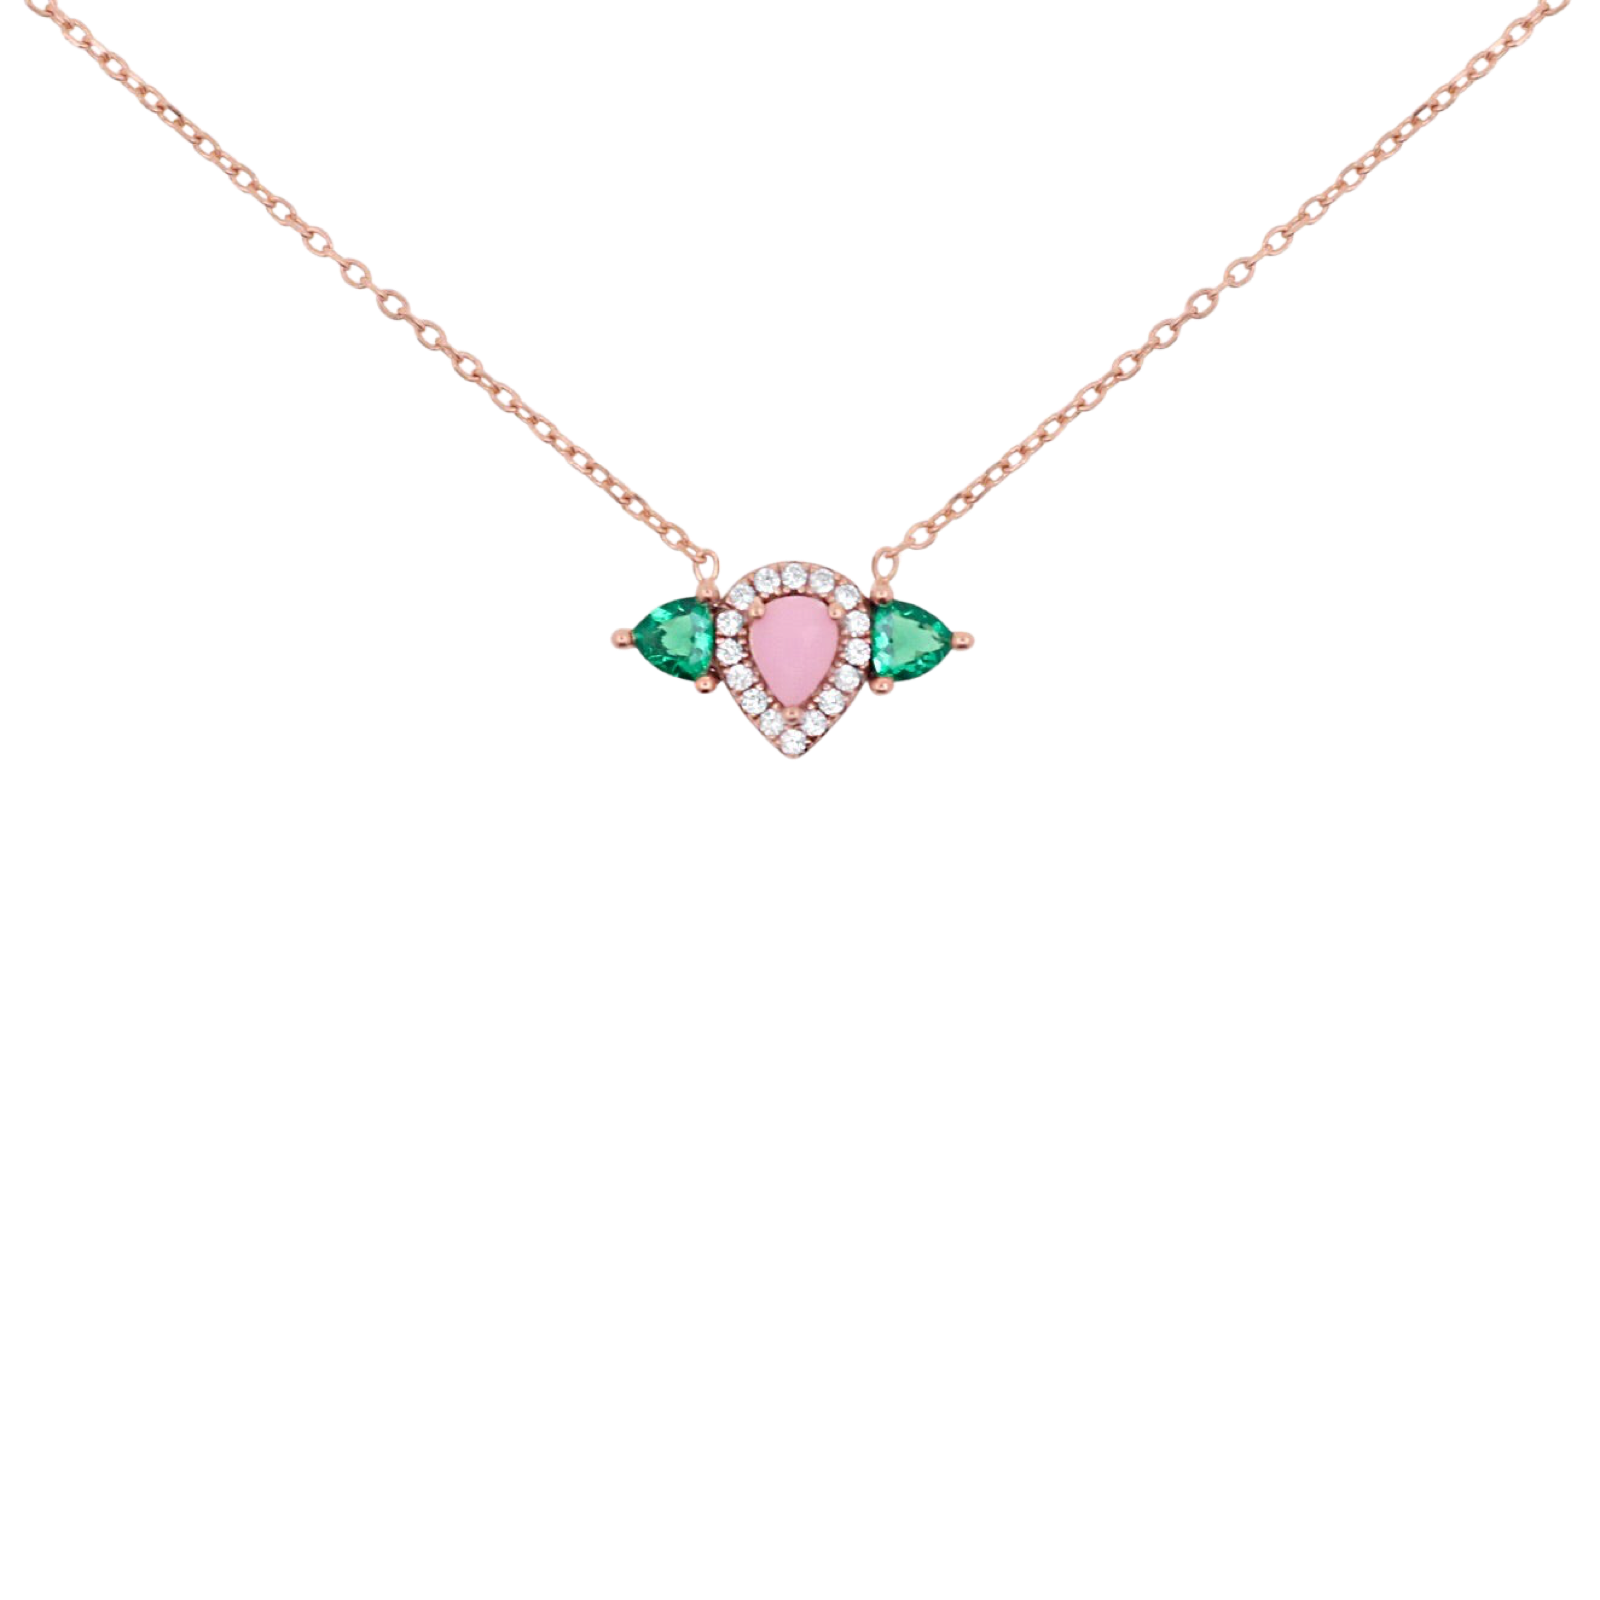 Pink Mel necklace